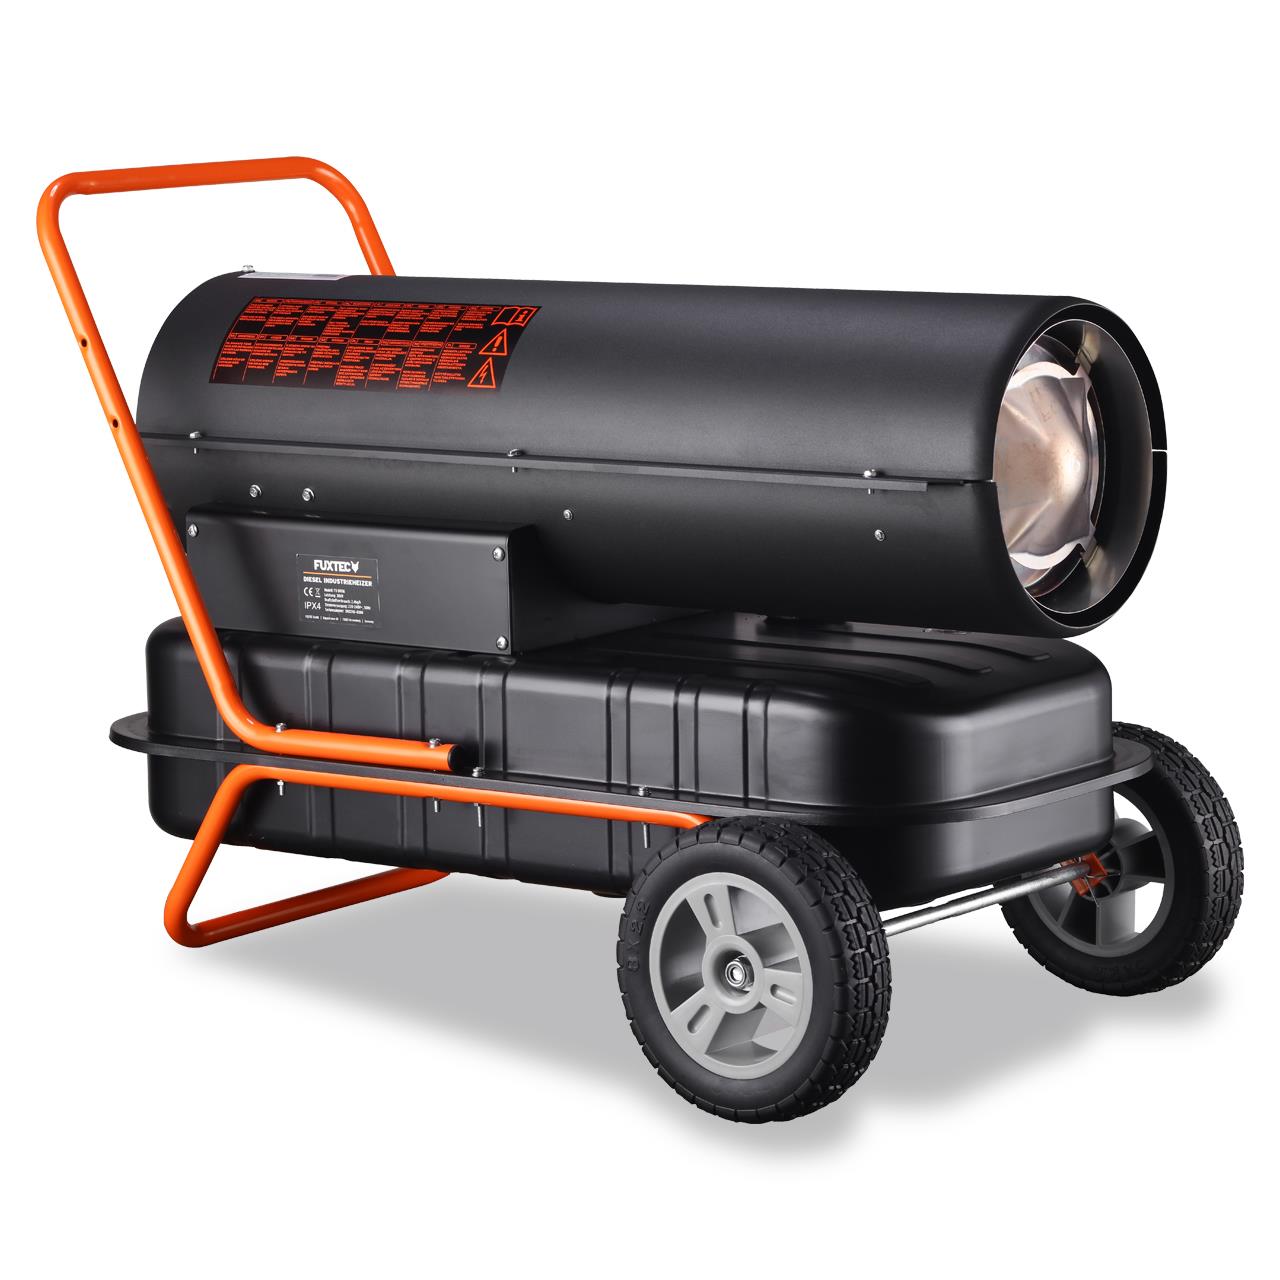 Diesel/Kerosene space heater FUXTEC DH116